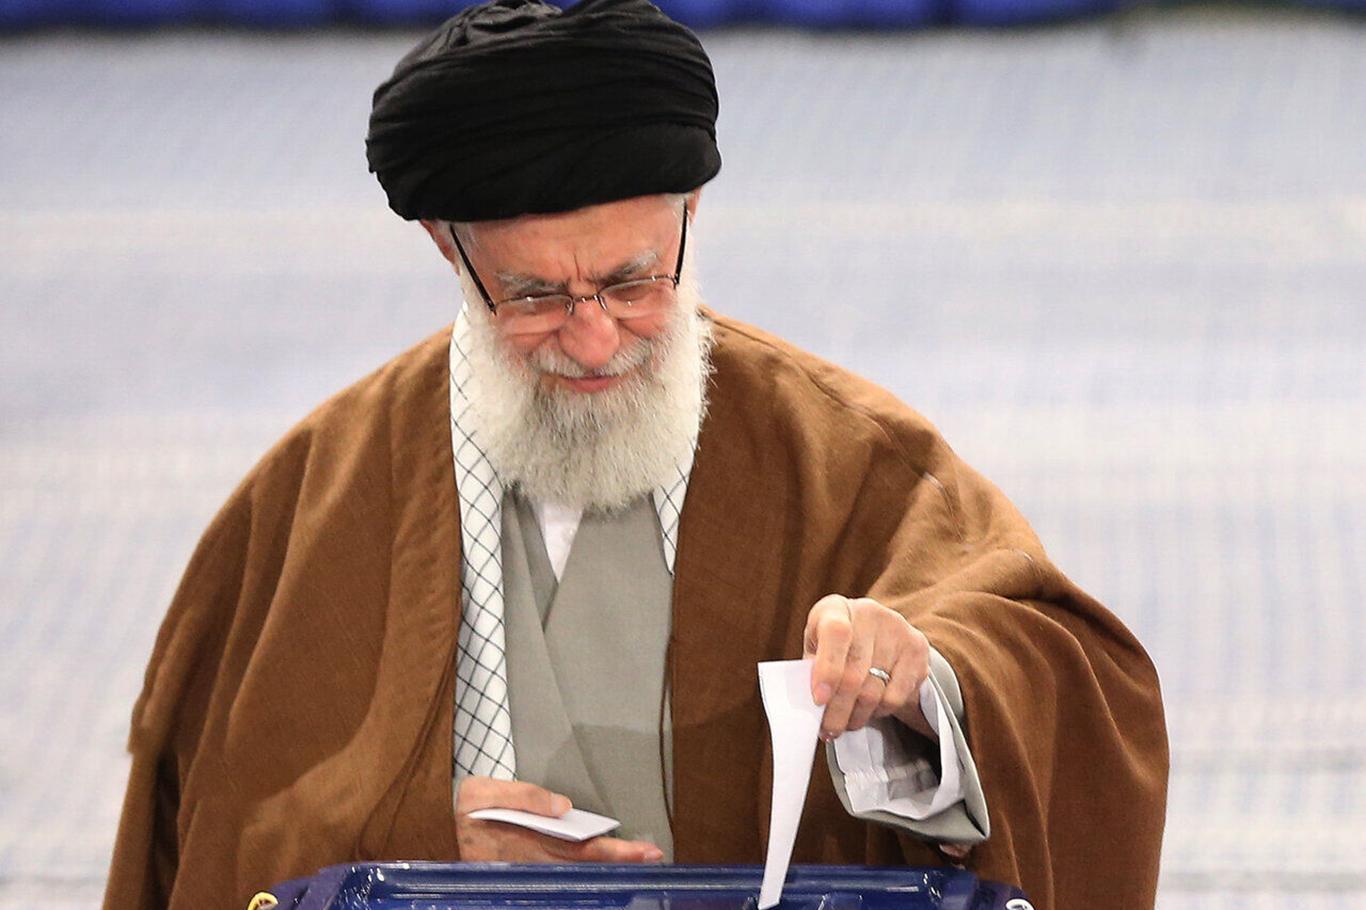 Elections guarantee national interests, Khamenei says